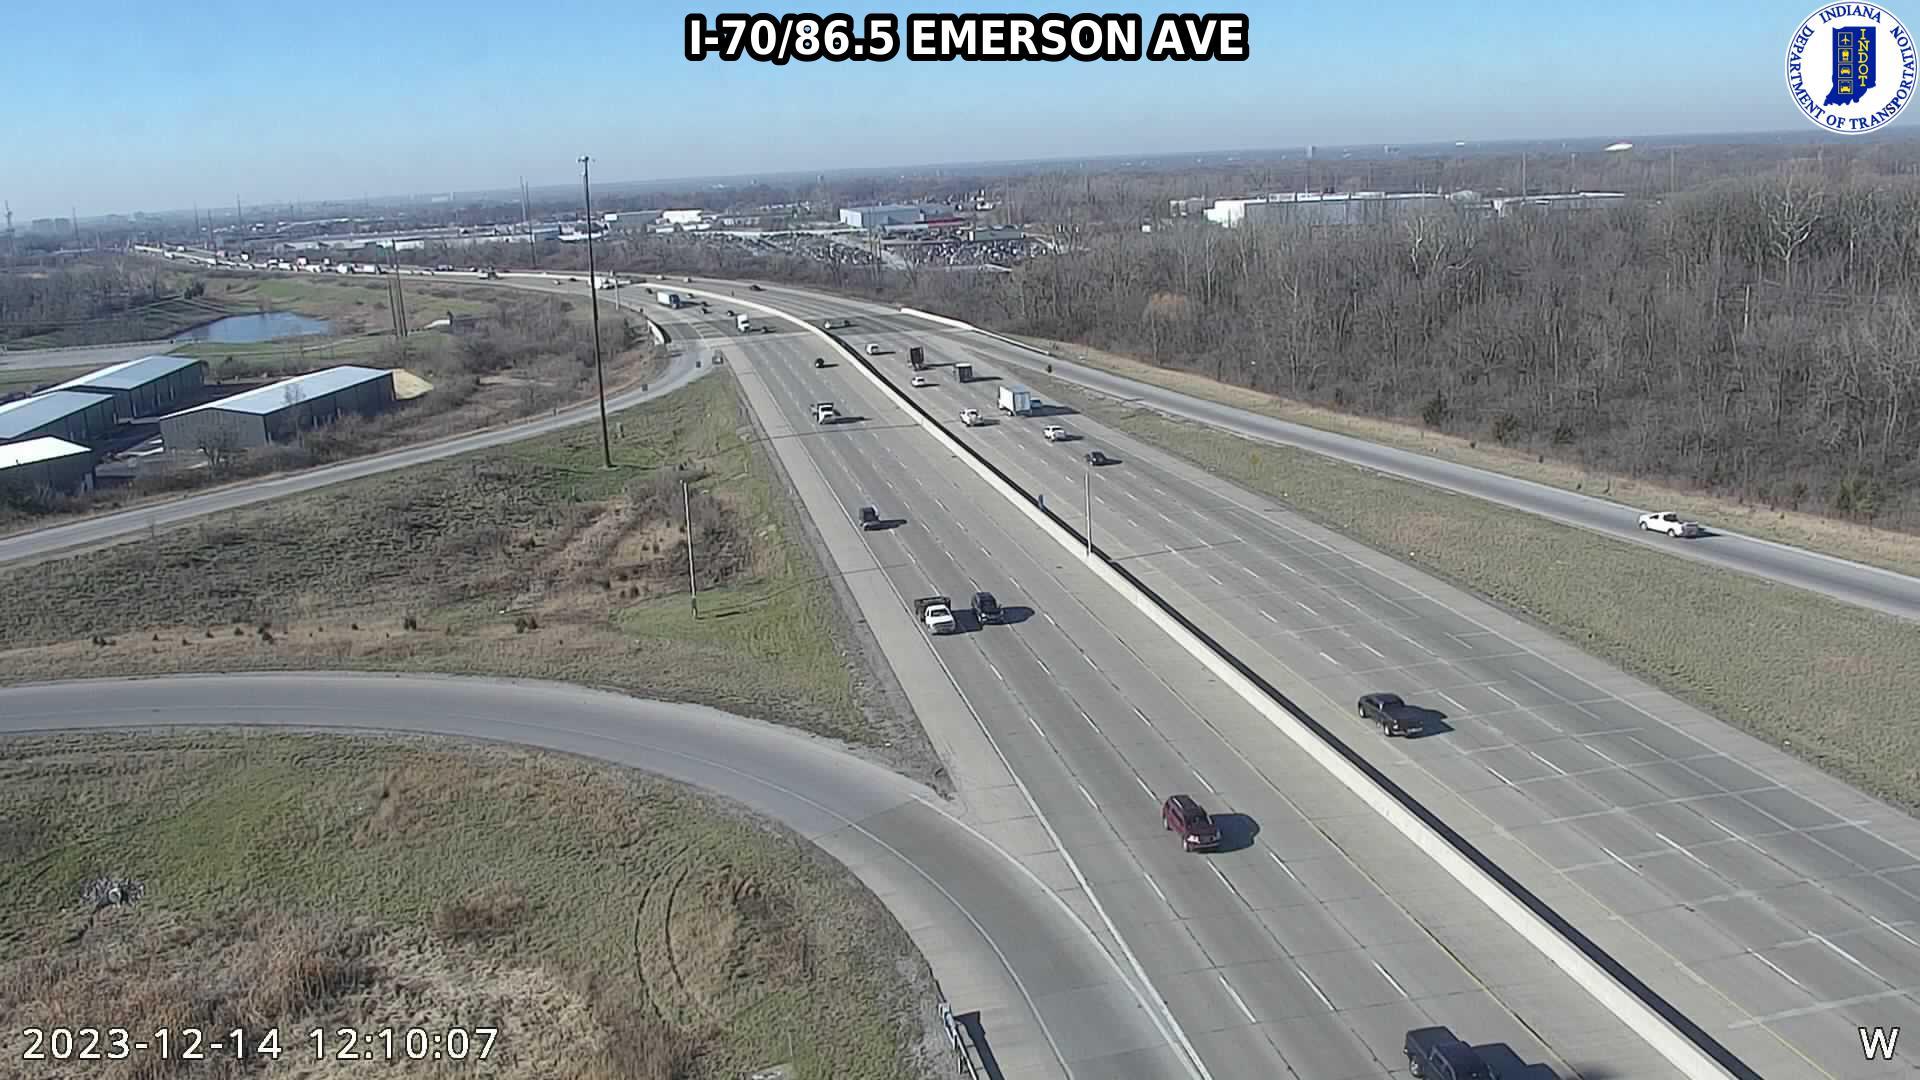 Otterbein: I-70: I-70/86.5 EMERSON AVE Traffic Camera